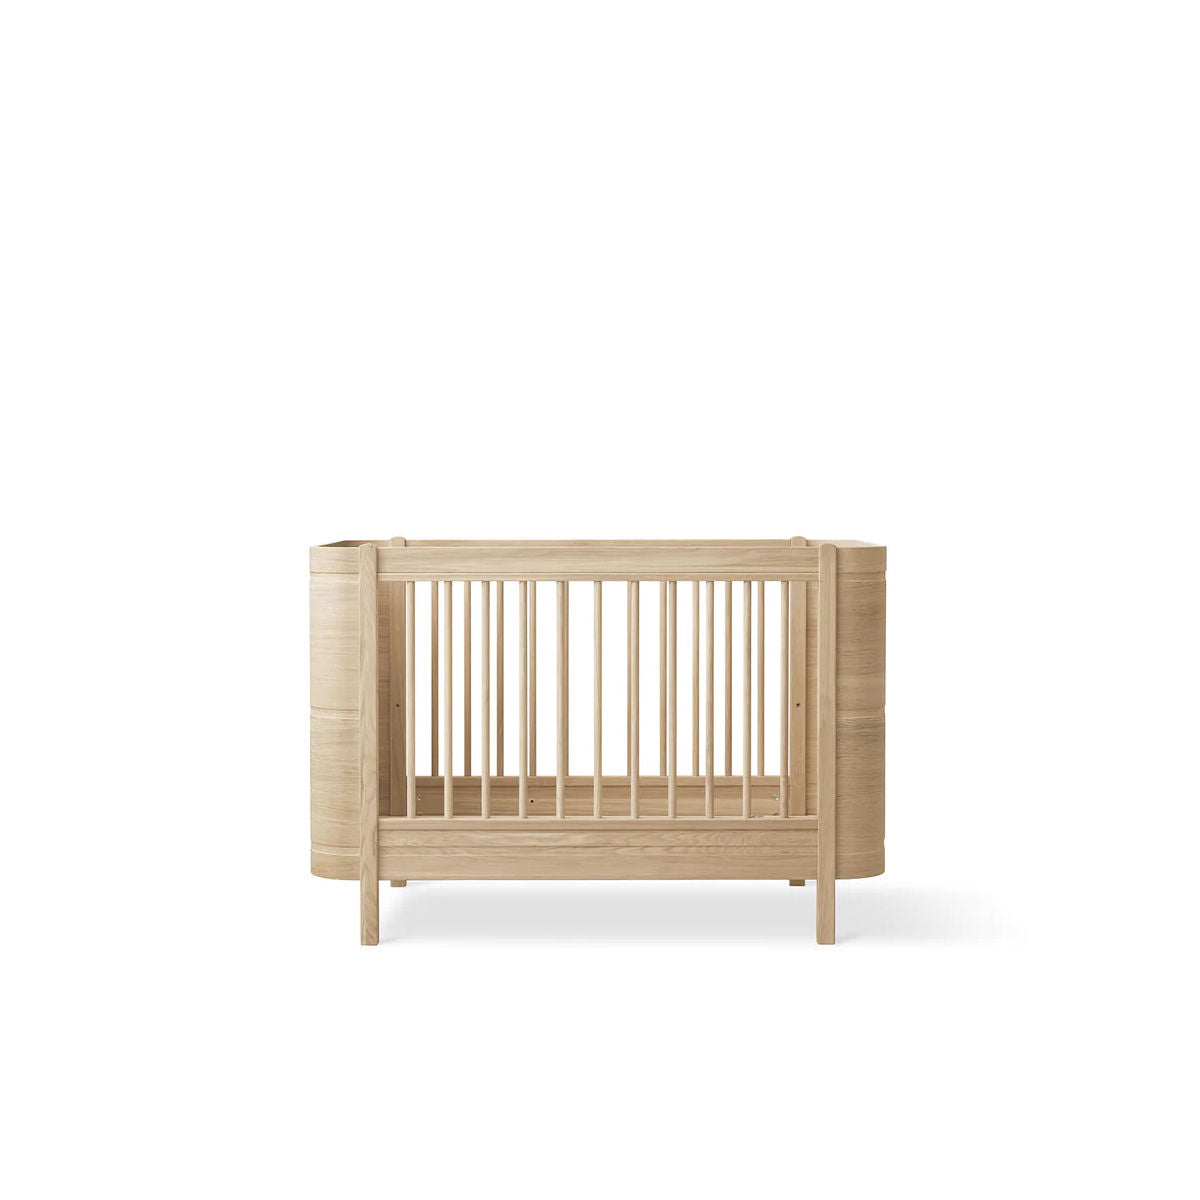 Oliver Furniture wood mini + Babybett inkl. Umbauset Eiche